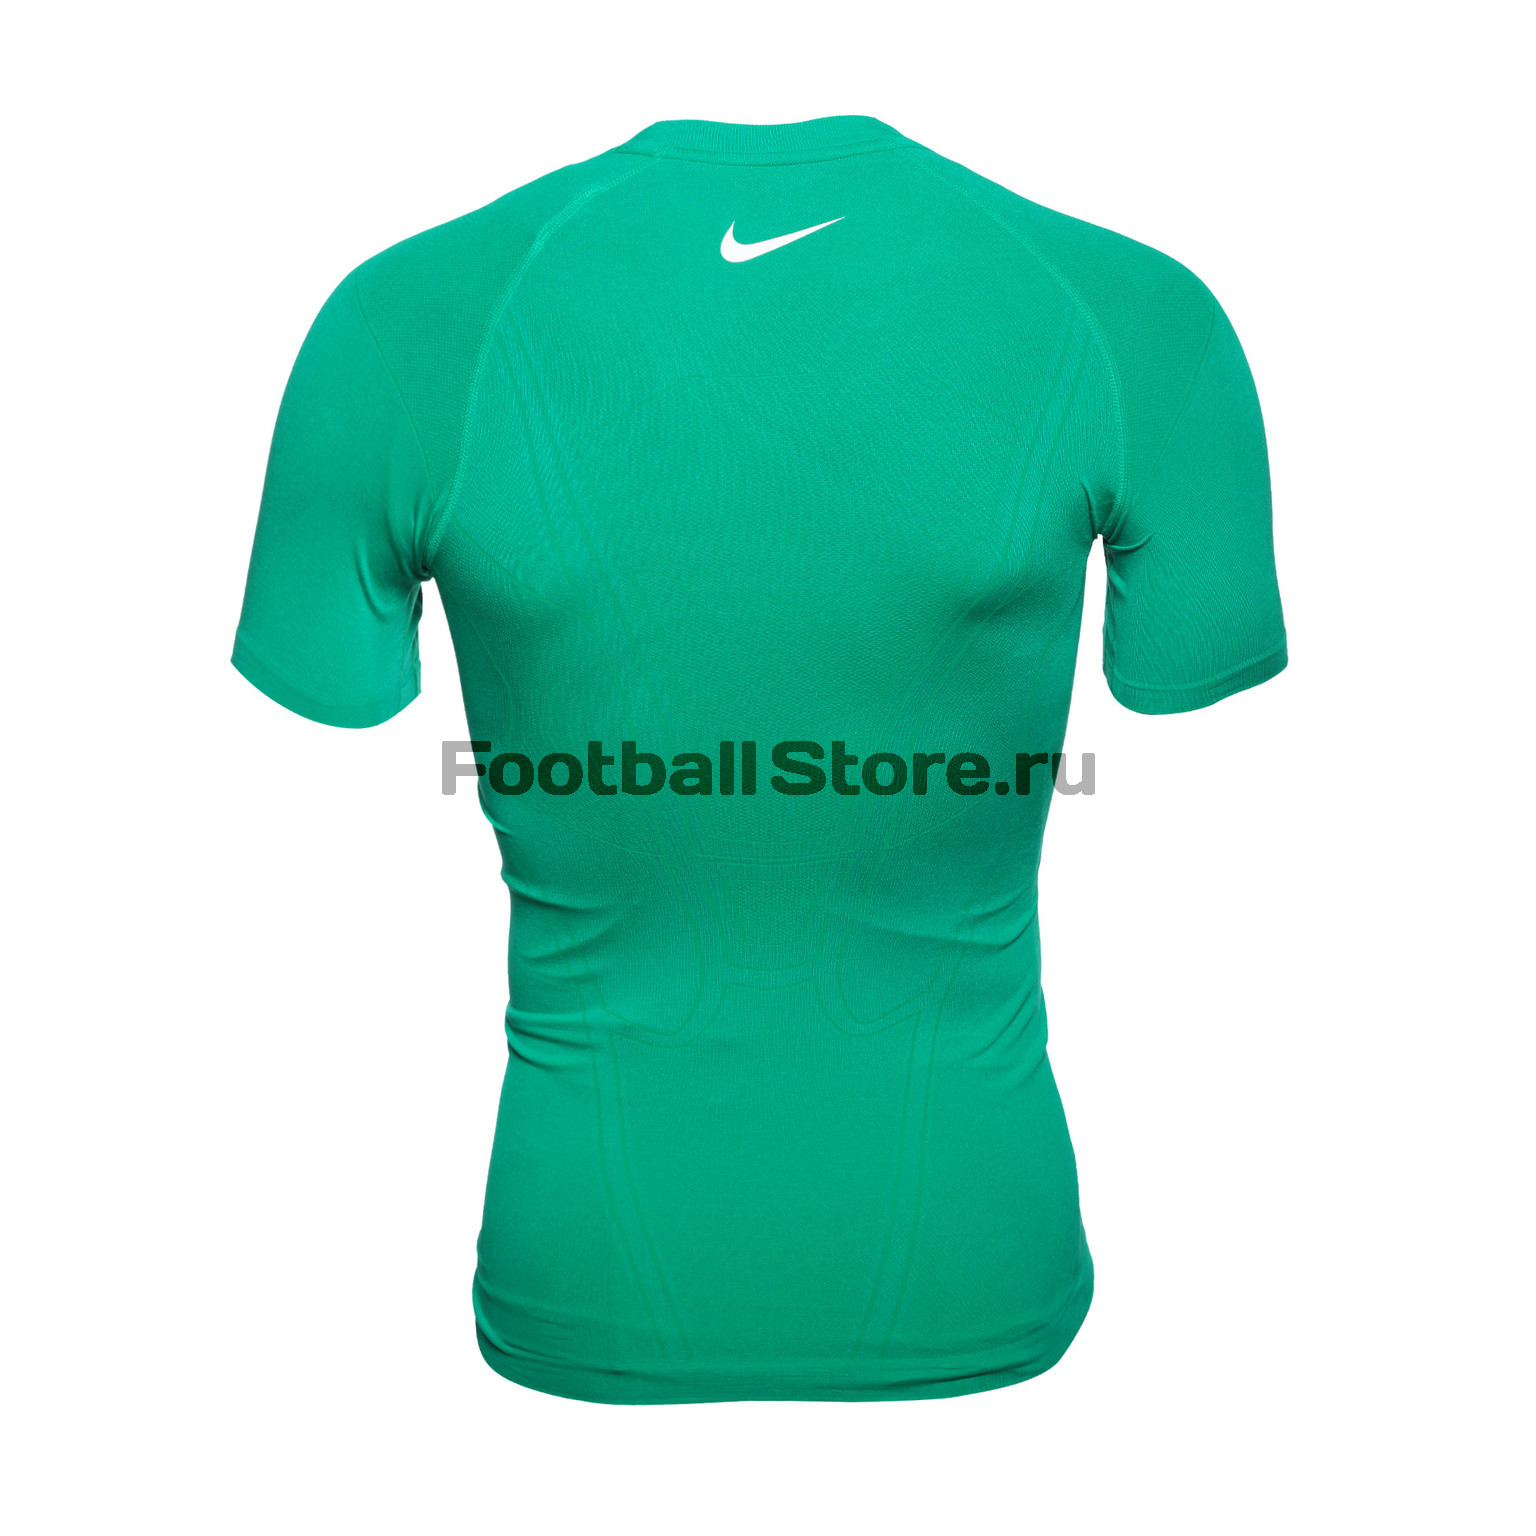 Белье футболка Nike Smls LS Top 824619-319